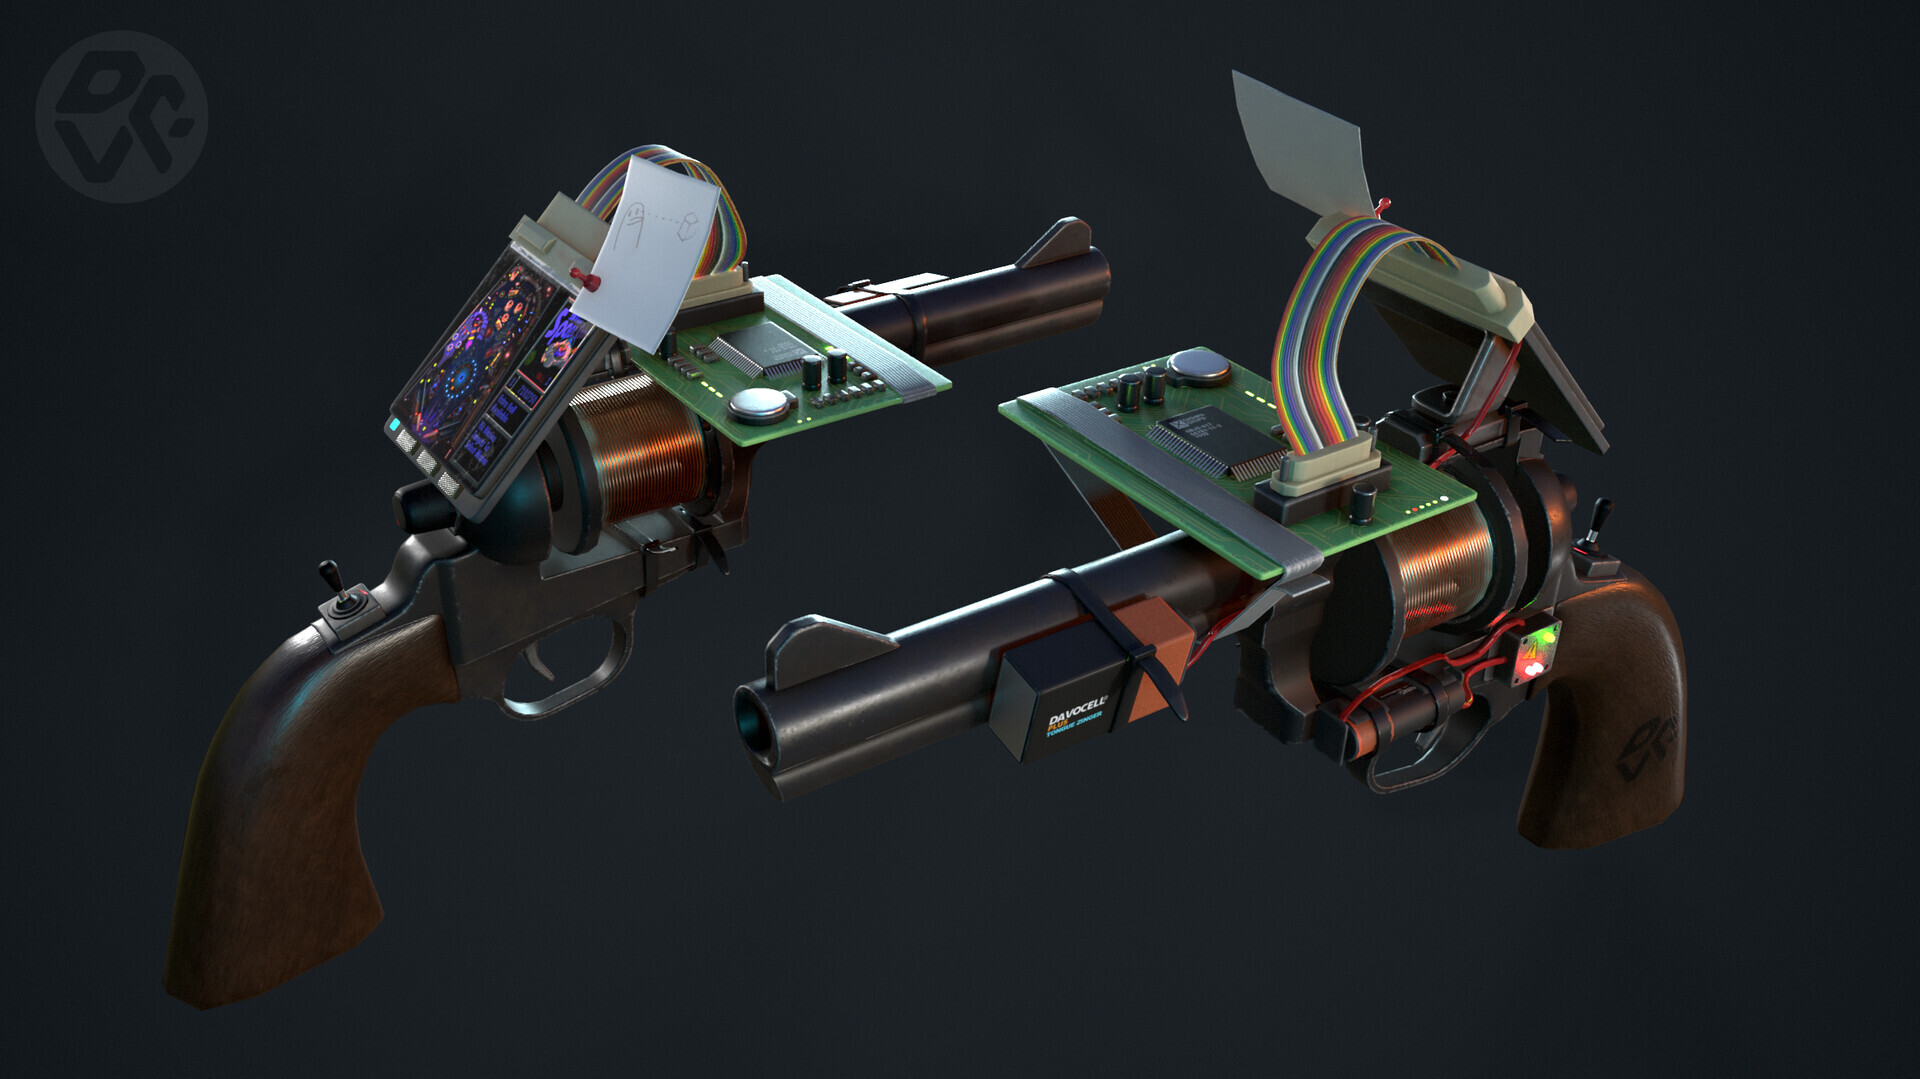 Tool Gun render uploaded by Dave on his ArtStation last month.